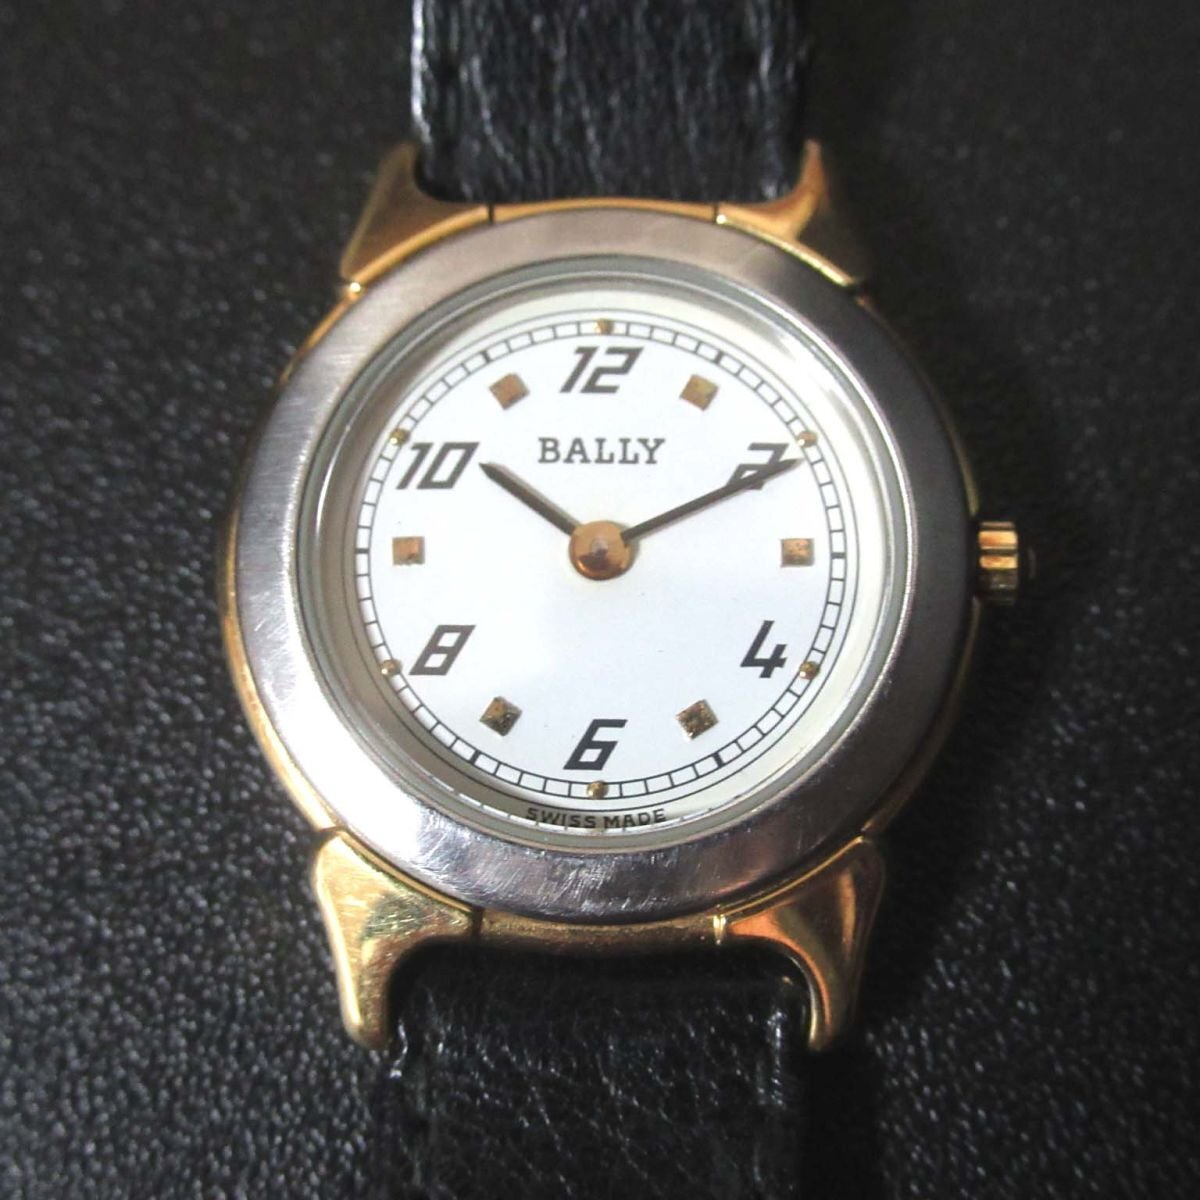  beautiful goods BALLY Bally quartz 2 hands type leather belt lady's watch wristwatch 13.01 white face × black belt 